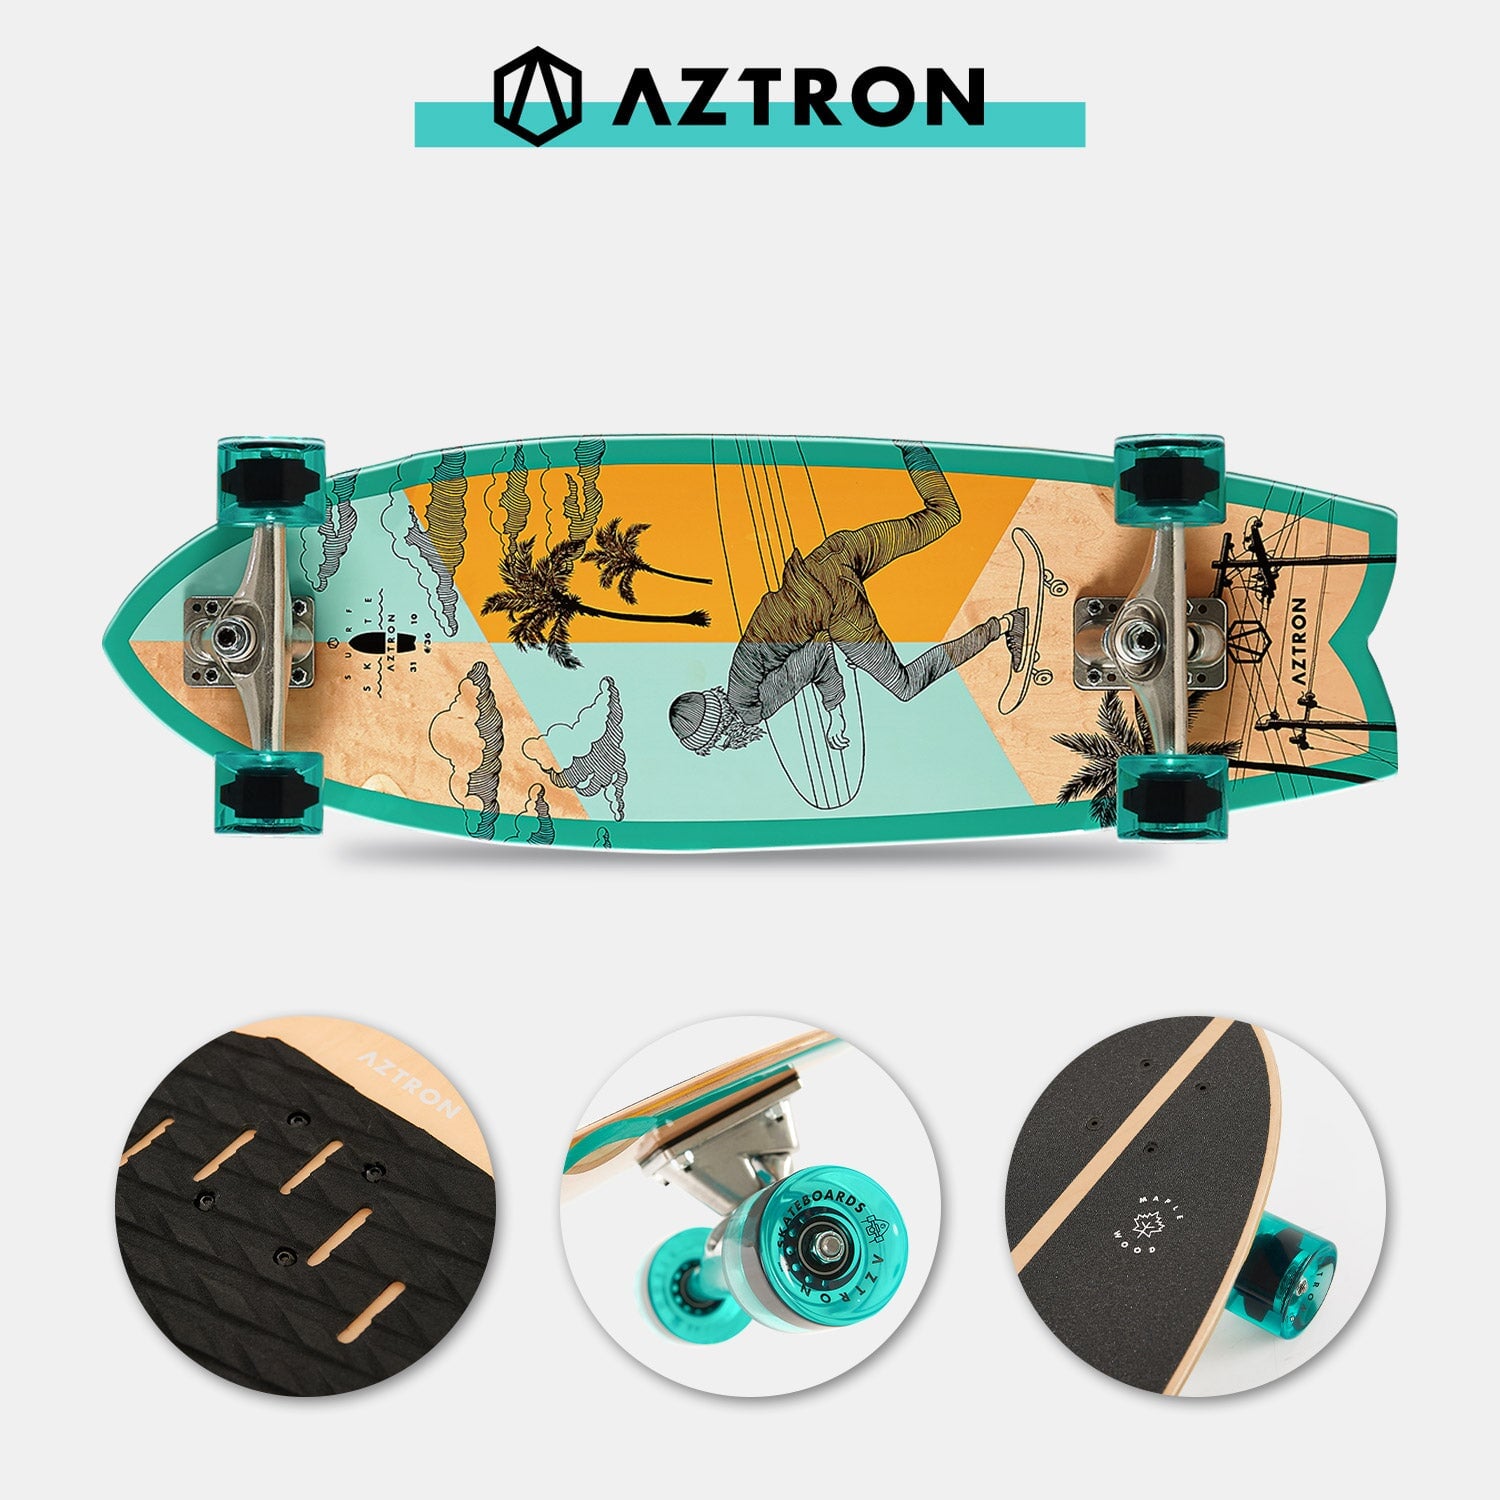 Aztron STREET 31 Surfskate Board